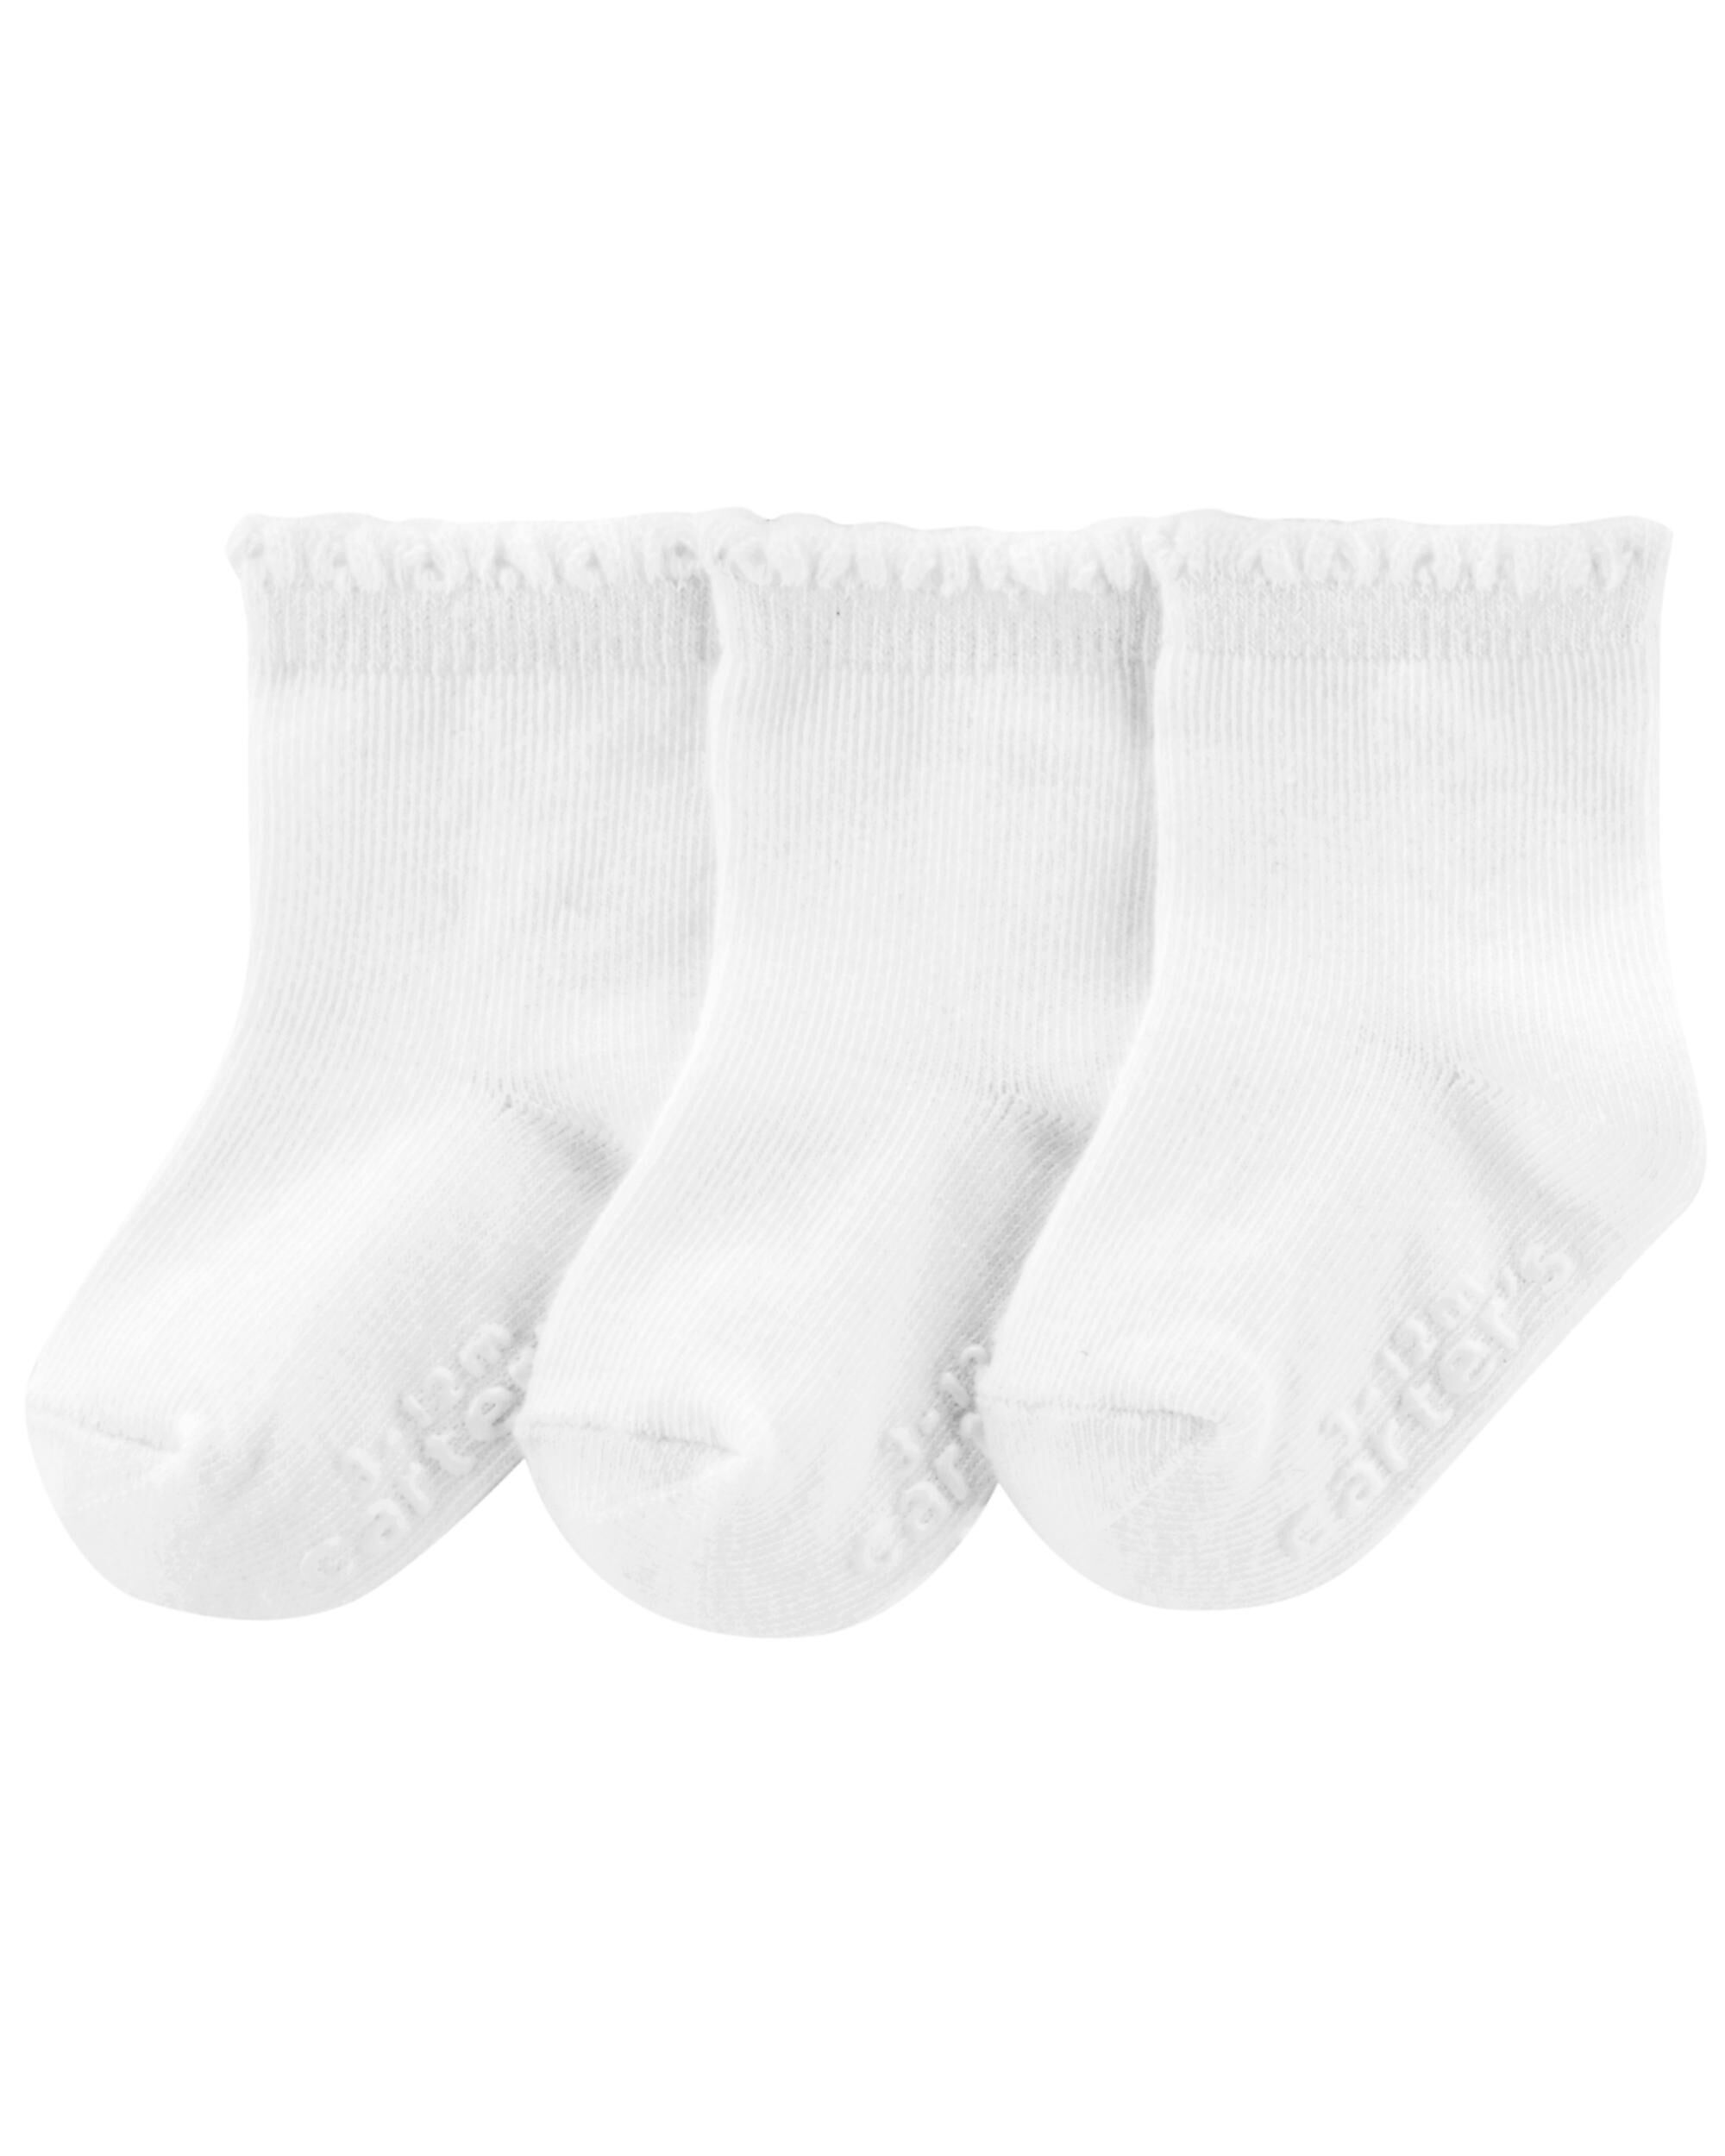 Carters 3-Pack Socks